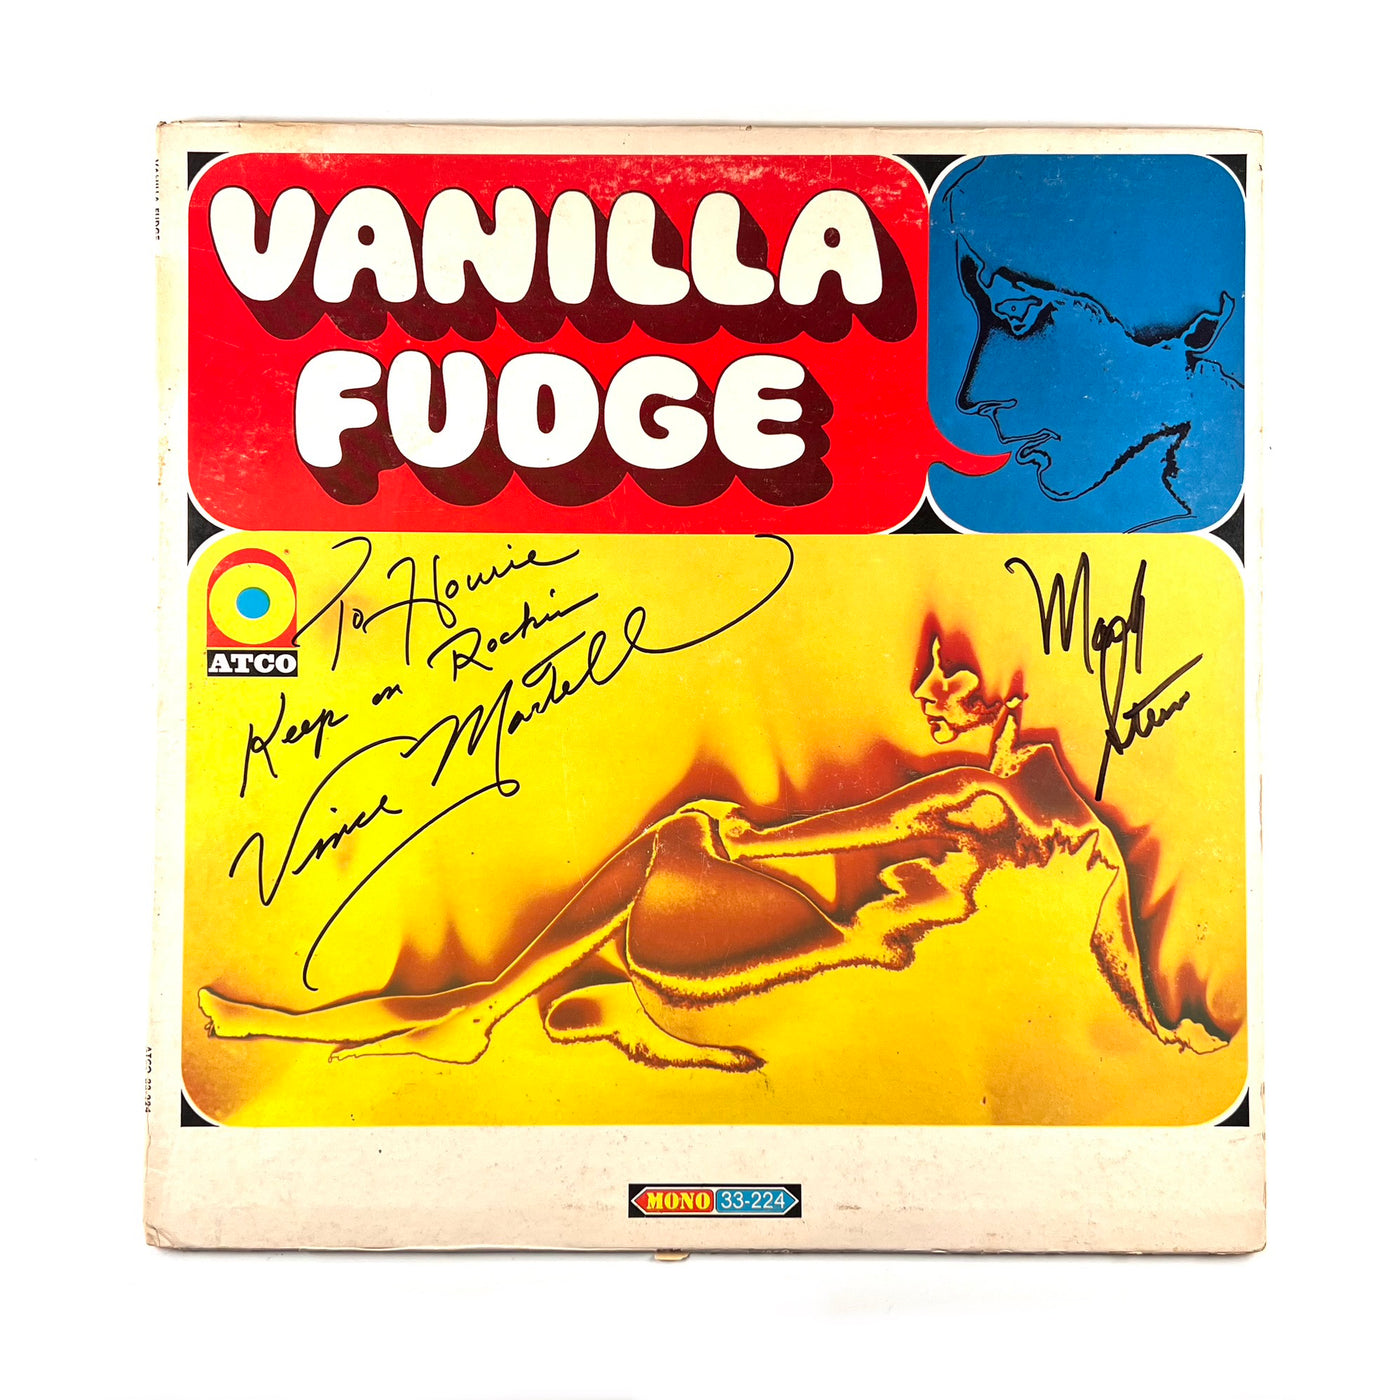 Vanilla Fudge - Vanilla Fudge - 1967 Mono Press